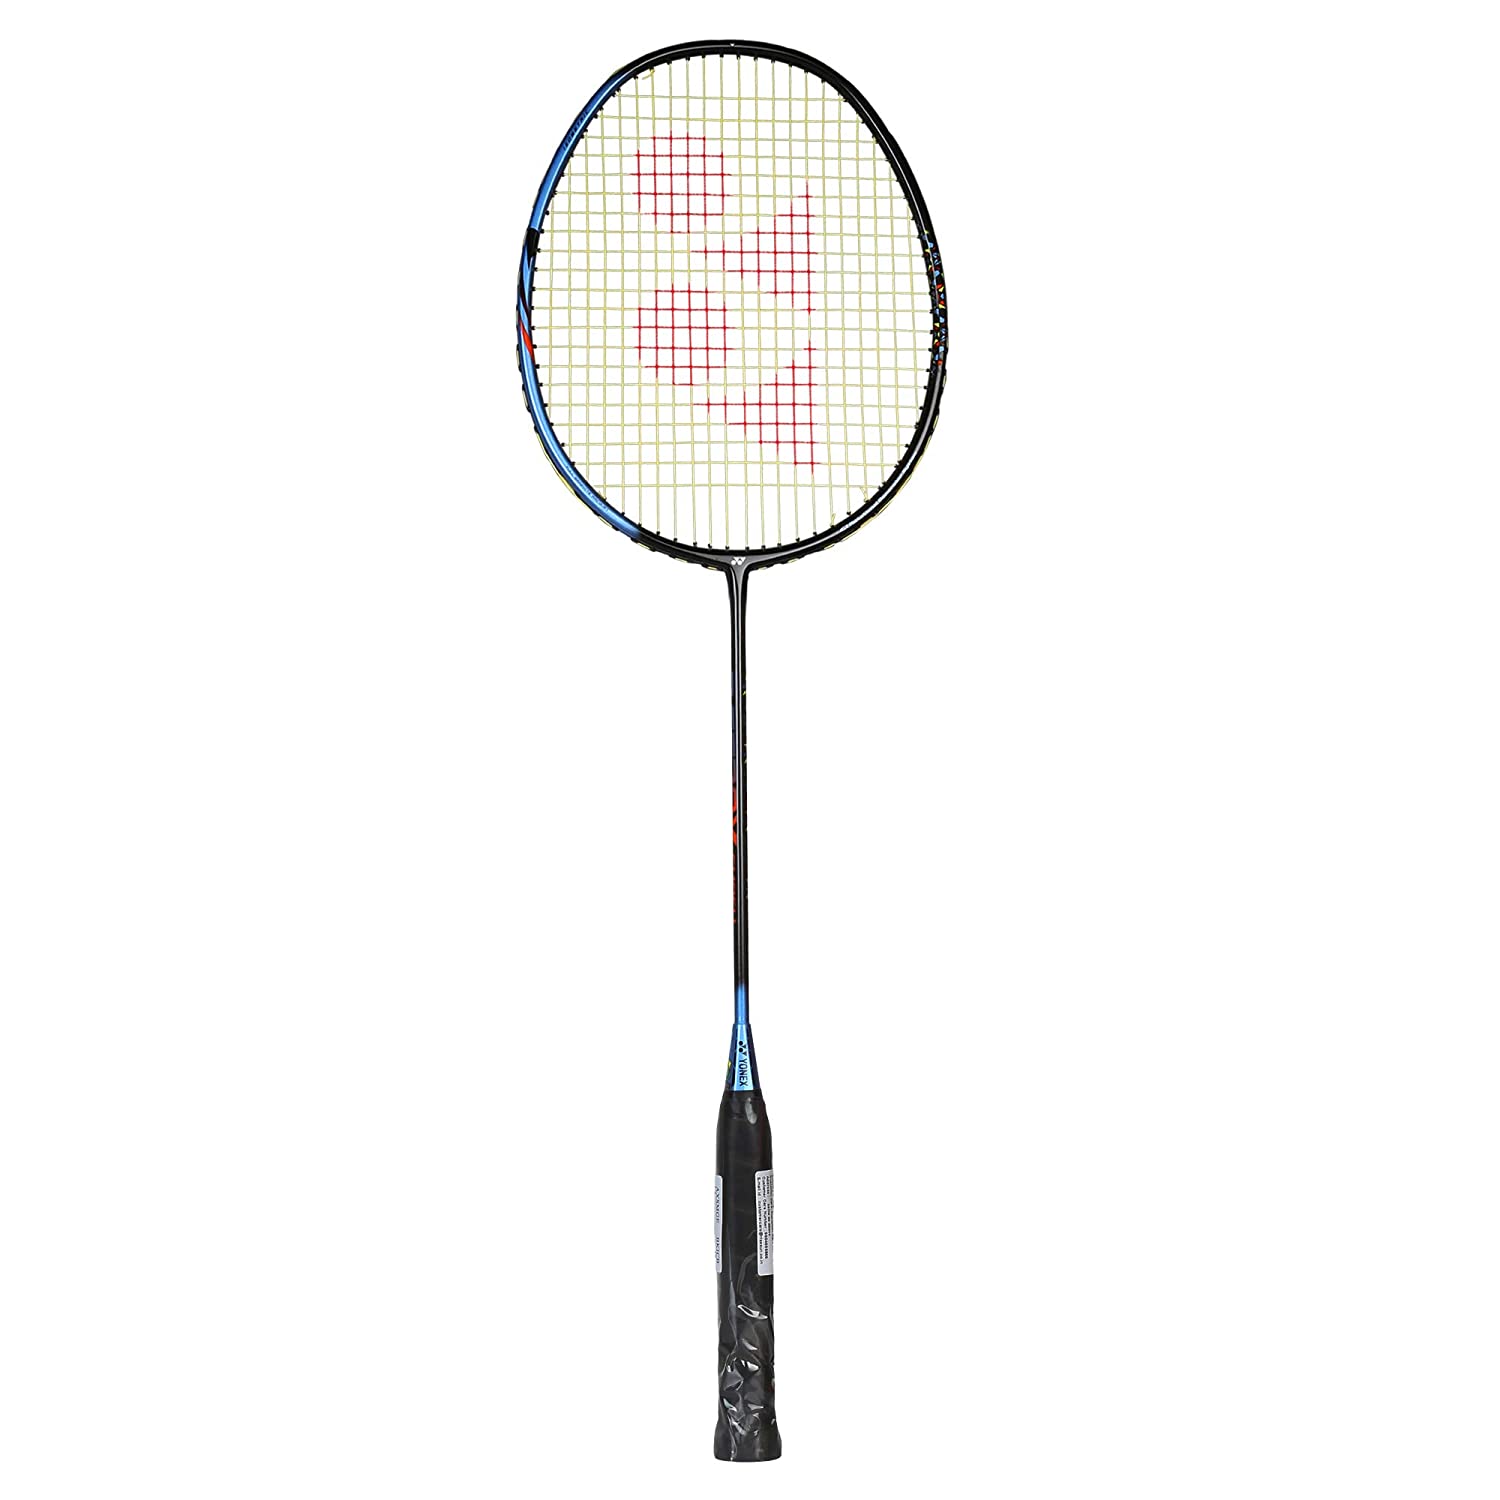 YONEX ASTROX Smash Badminton Racquet with Full Cover, G4 (Black Ice Blue) - Best Price online Prokicksports.com